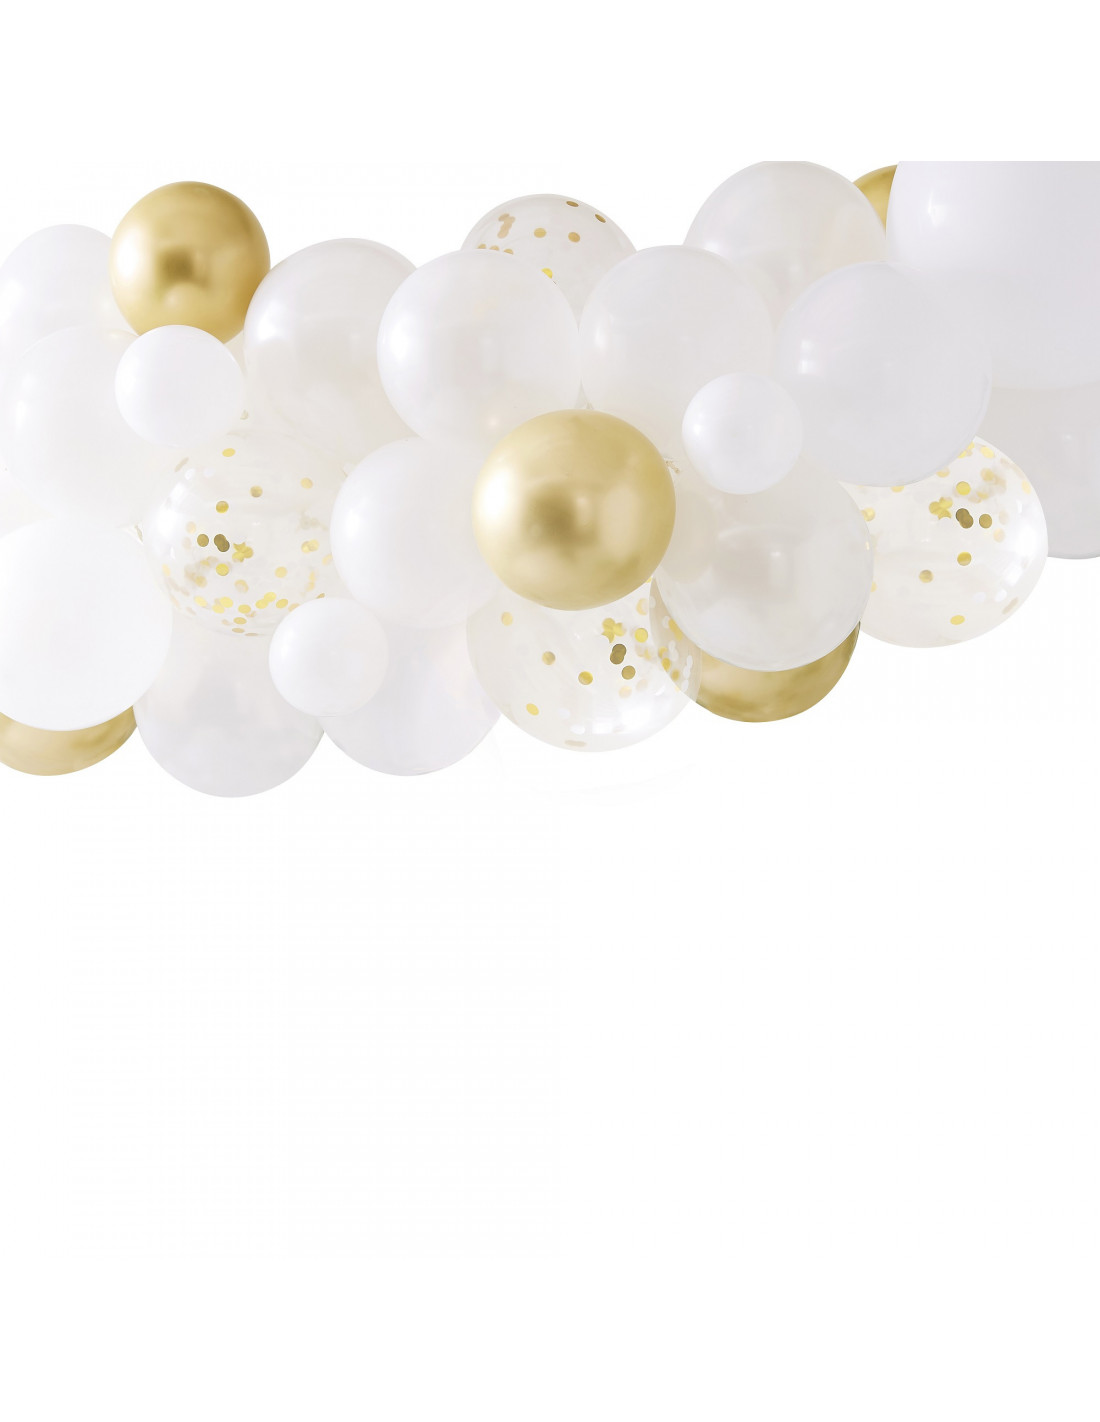 Kit Guirlande de Ballons Chrome Or, Blancs, Confettis - Les Bambetises